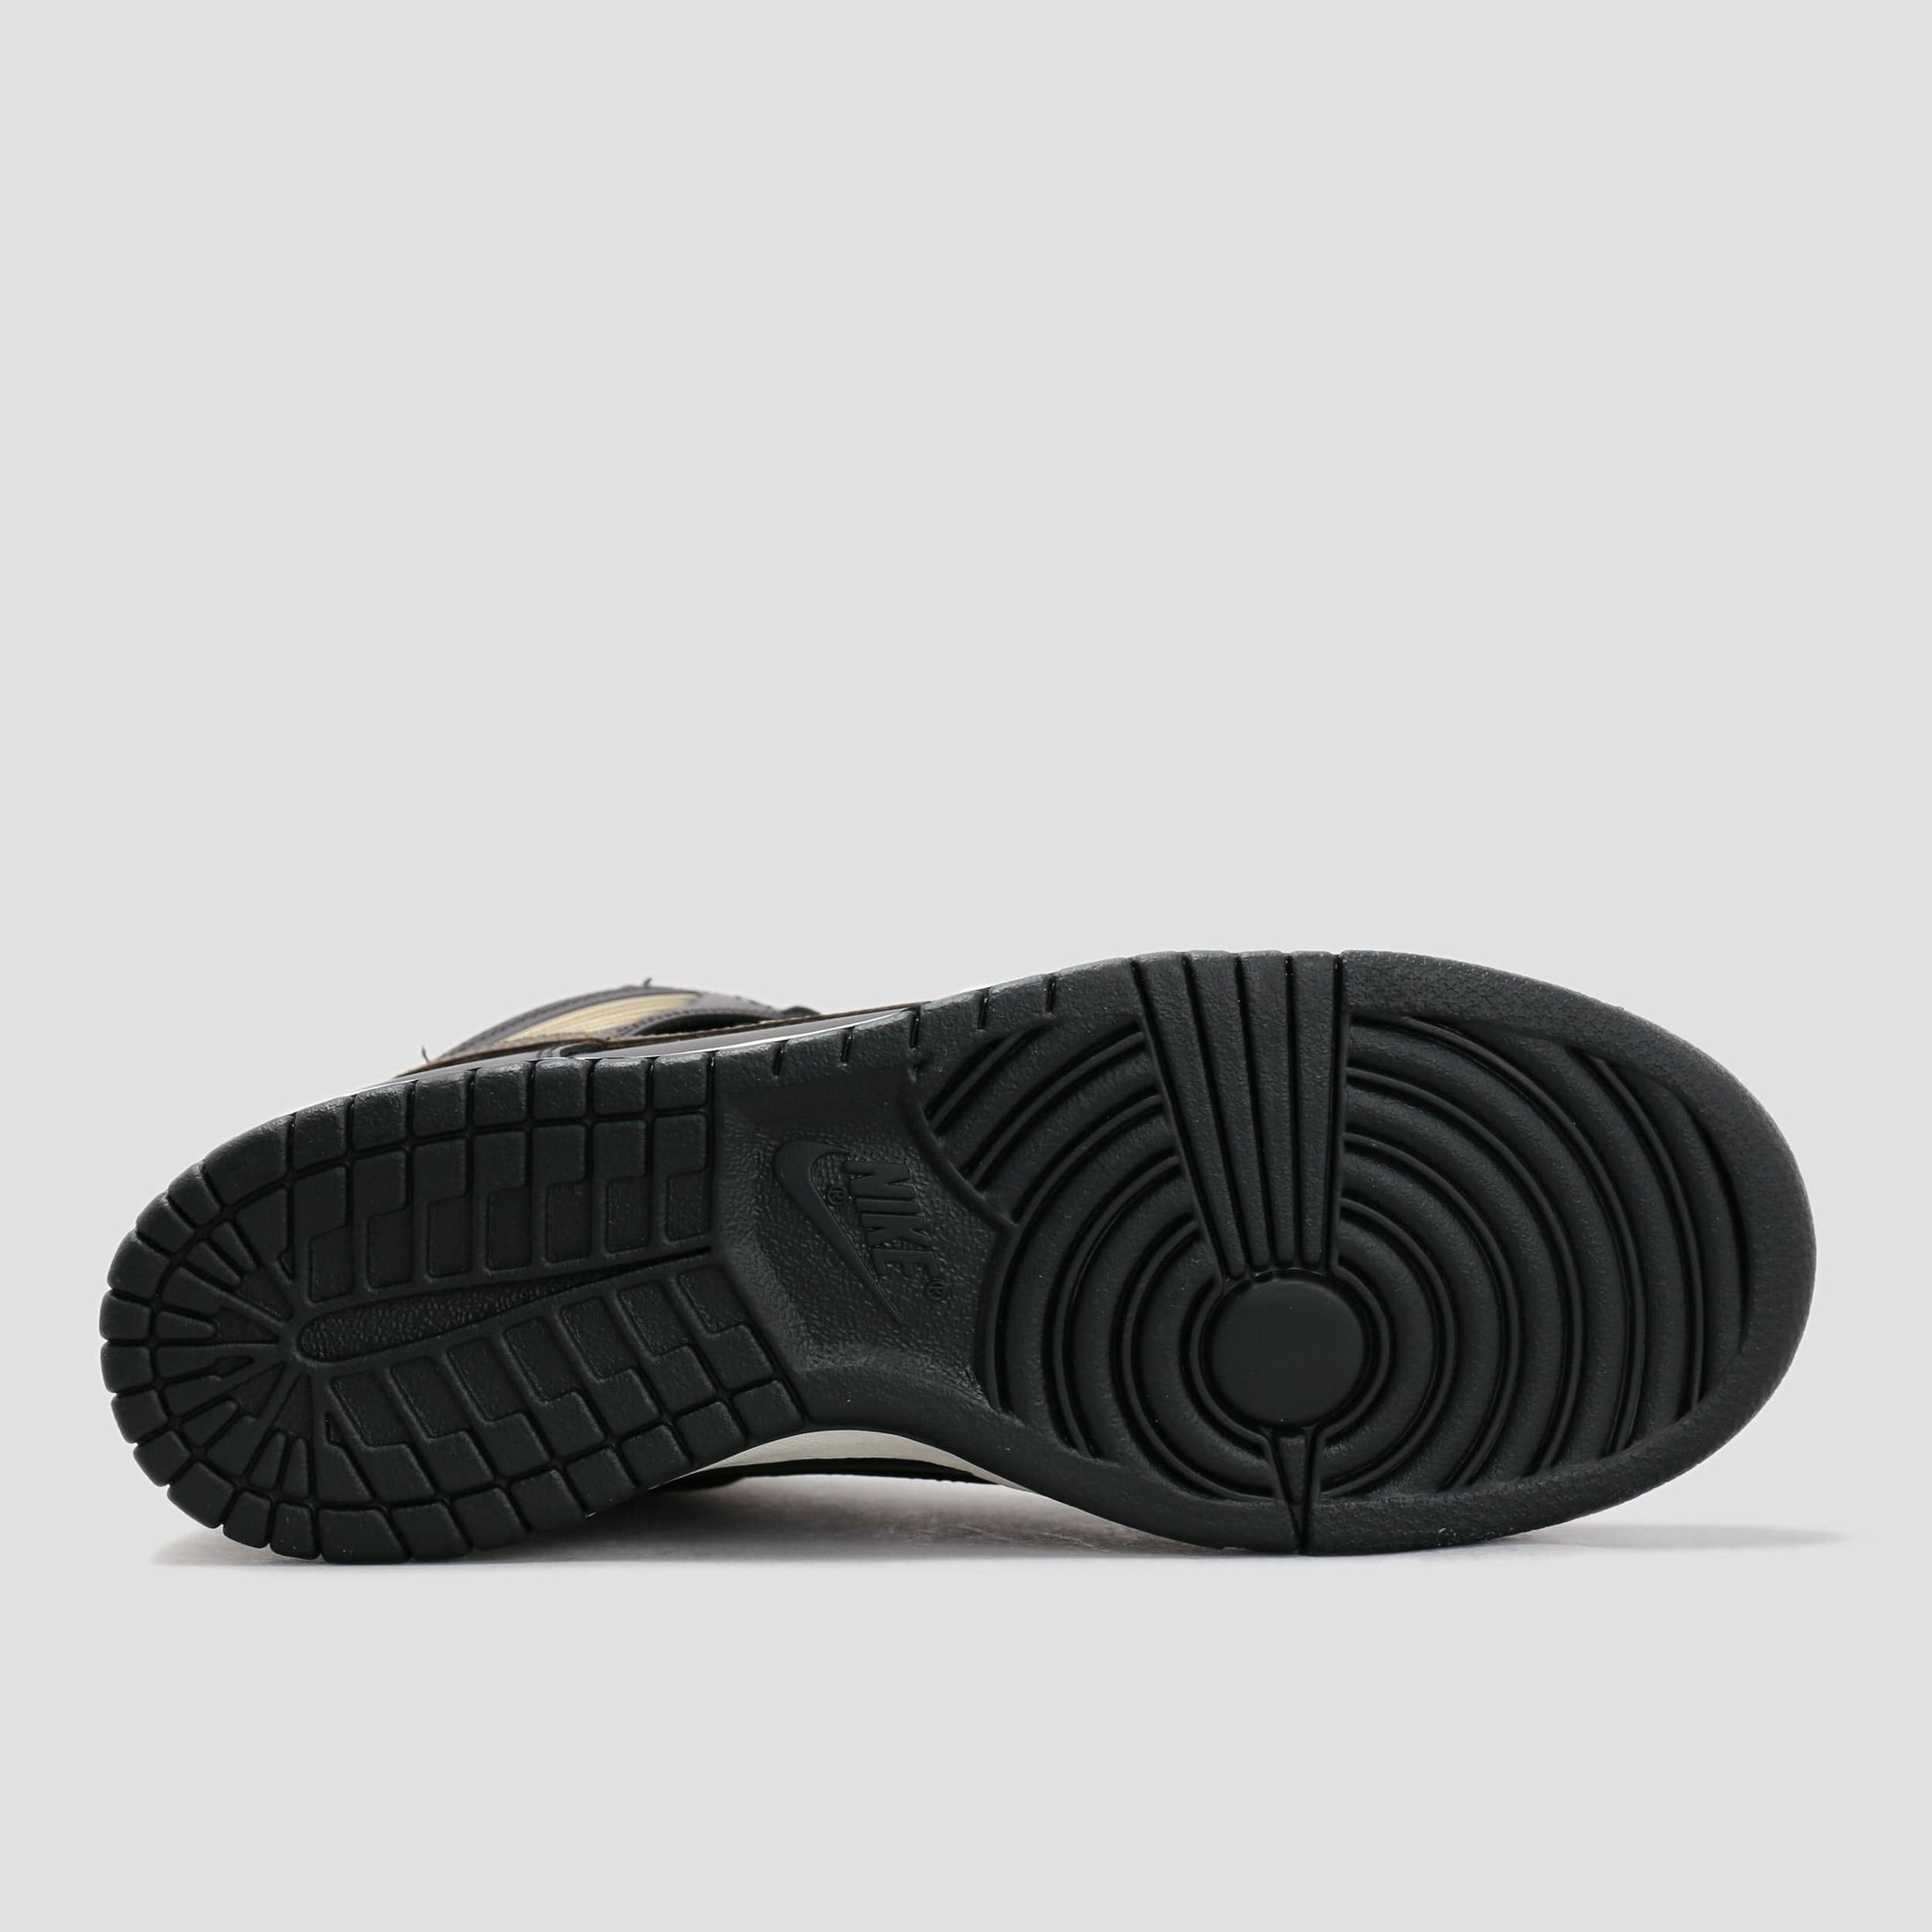 Nike SB Dunk High OG QS Shoes Black / Black - Metallic Gold